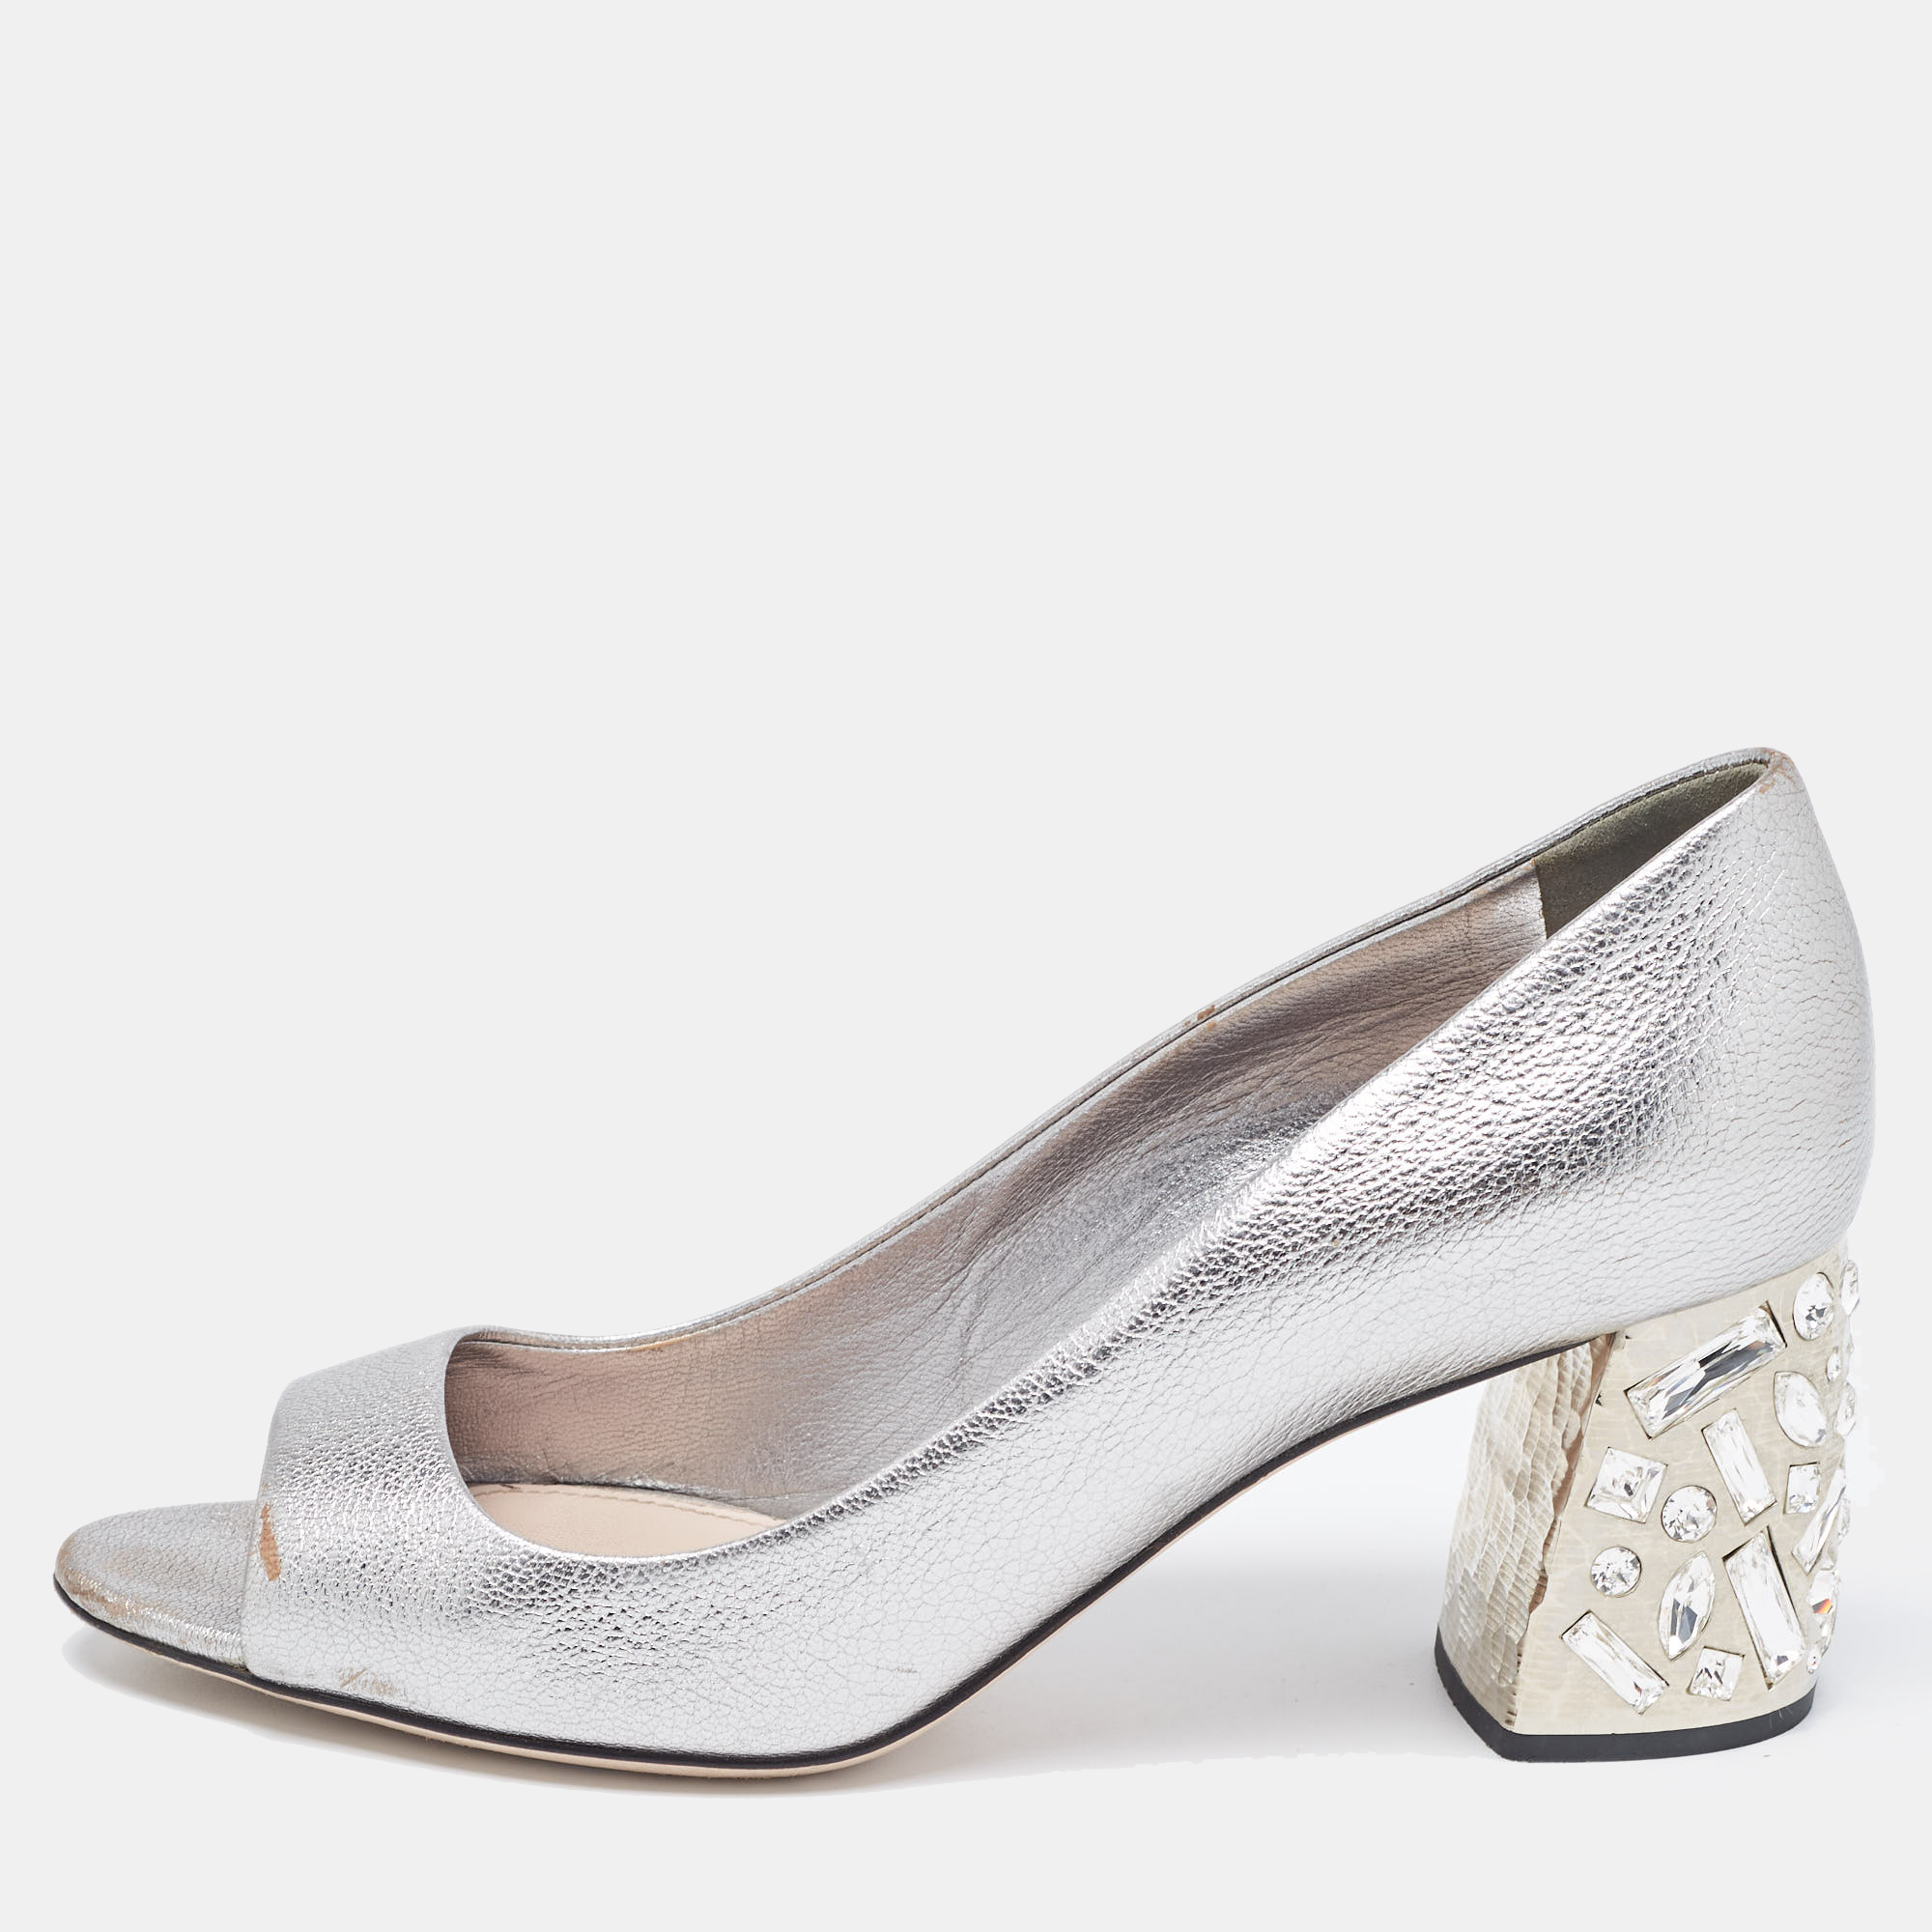 Miu Miu Silver Leather Crystal Block Heel Open Toe Pumps Size 38